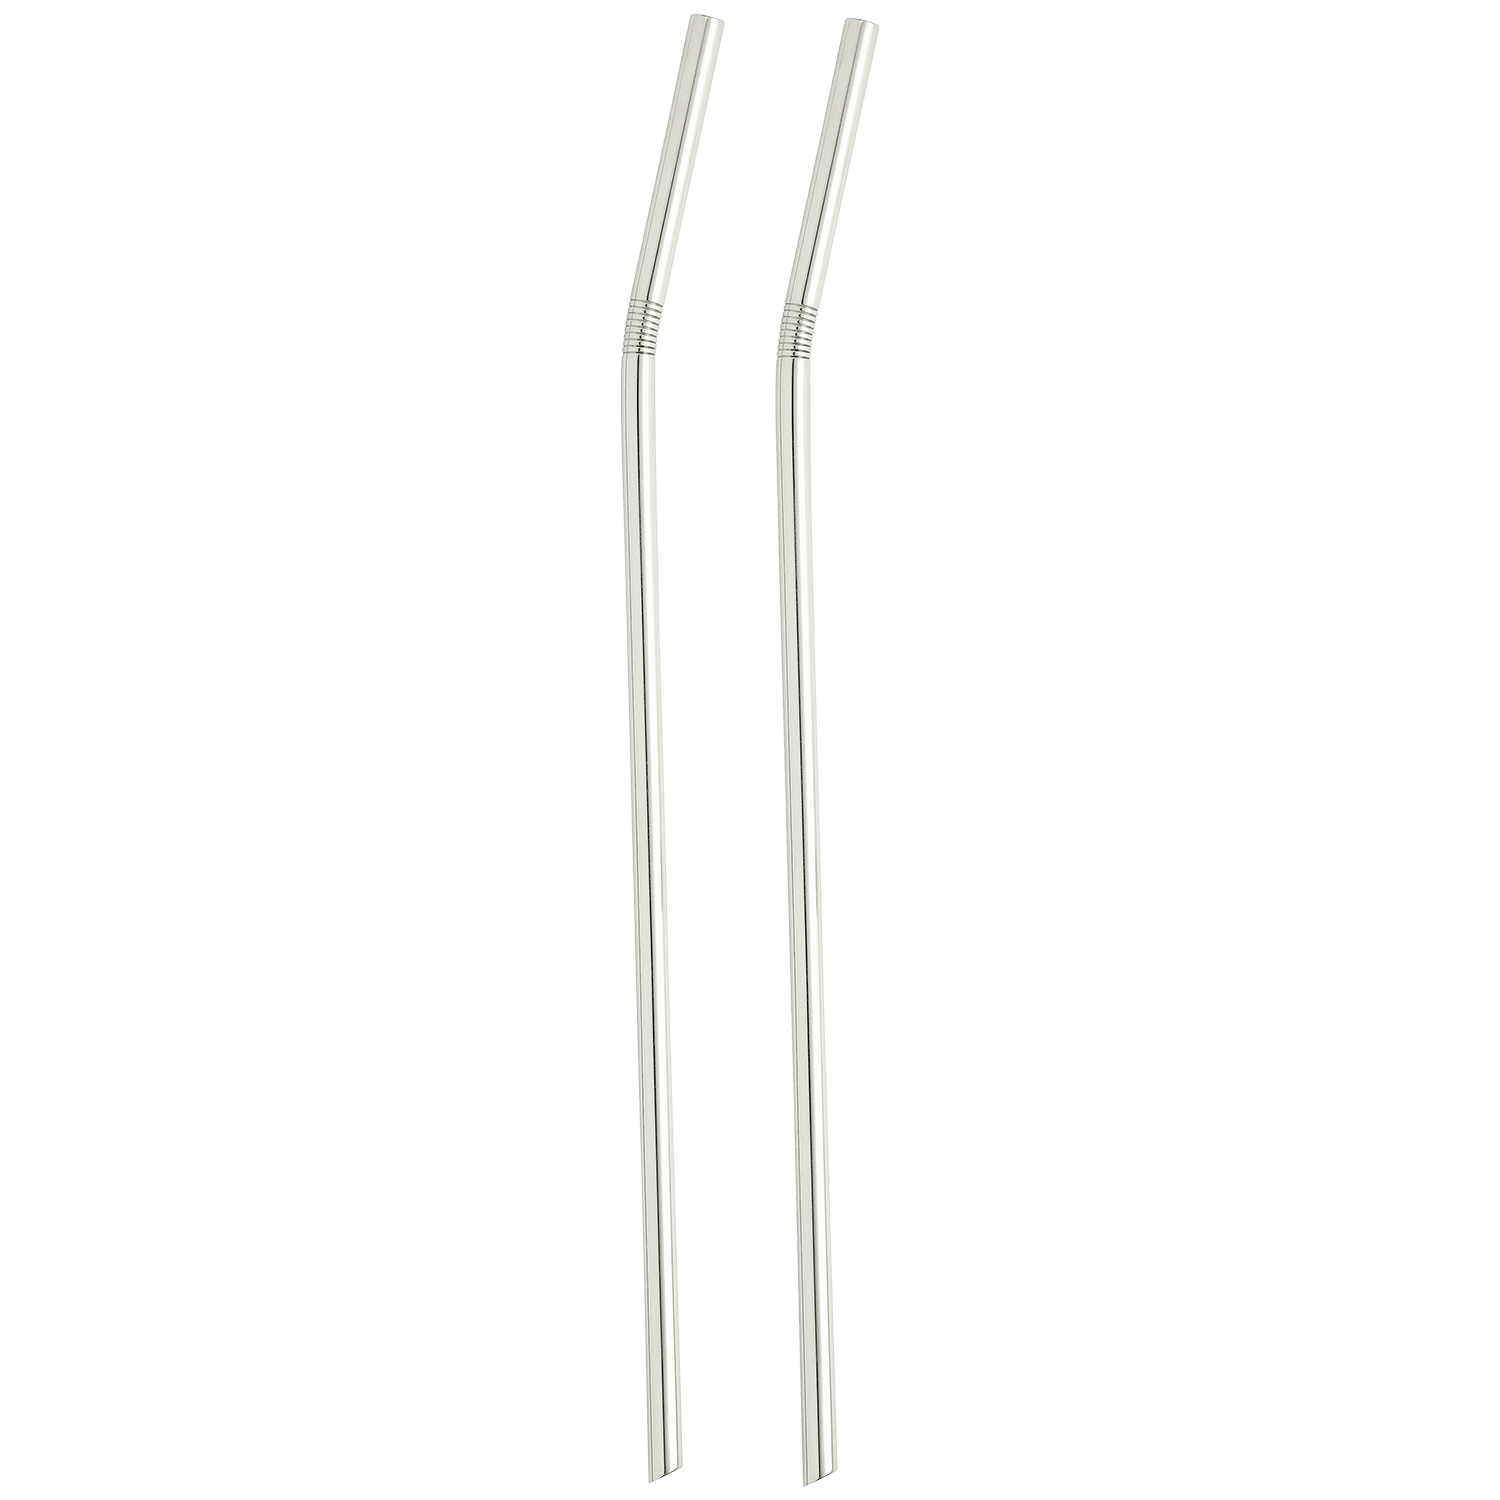 Set of 2 straws